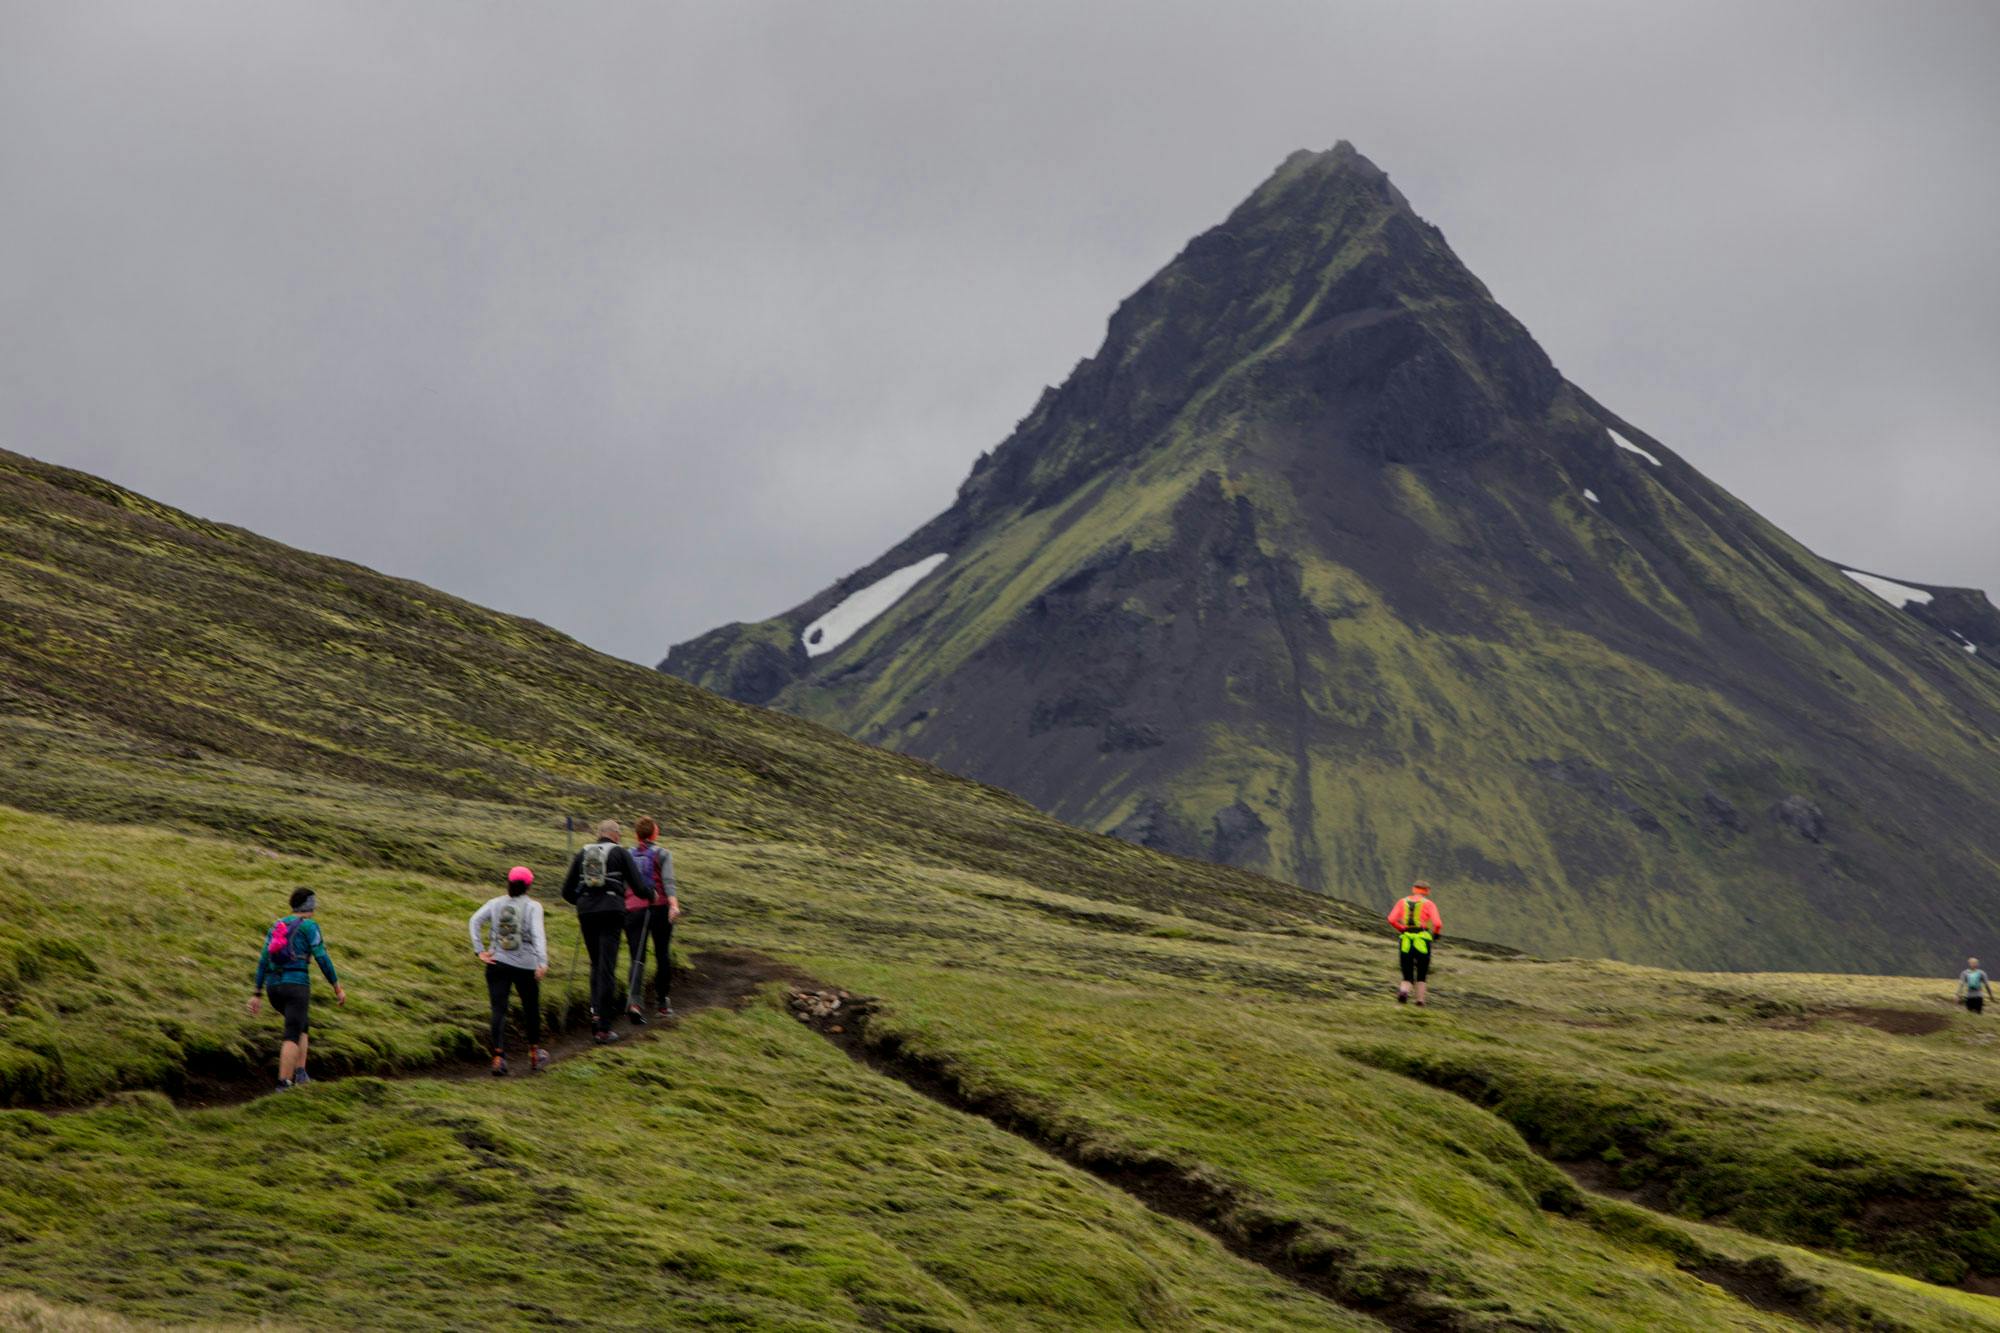 Few runners running in green landscape towards a black mountain